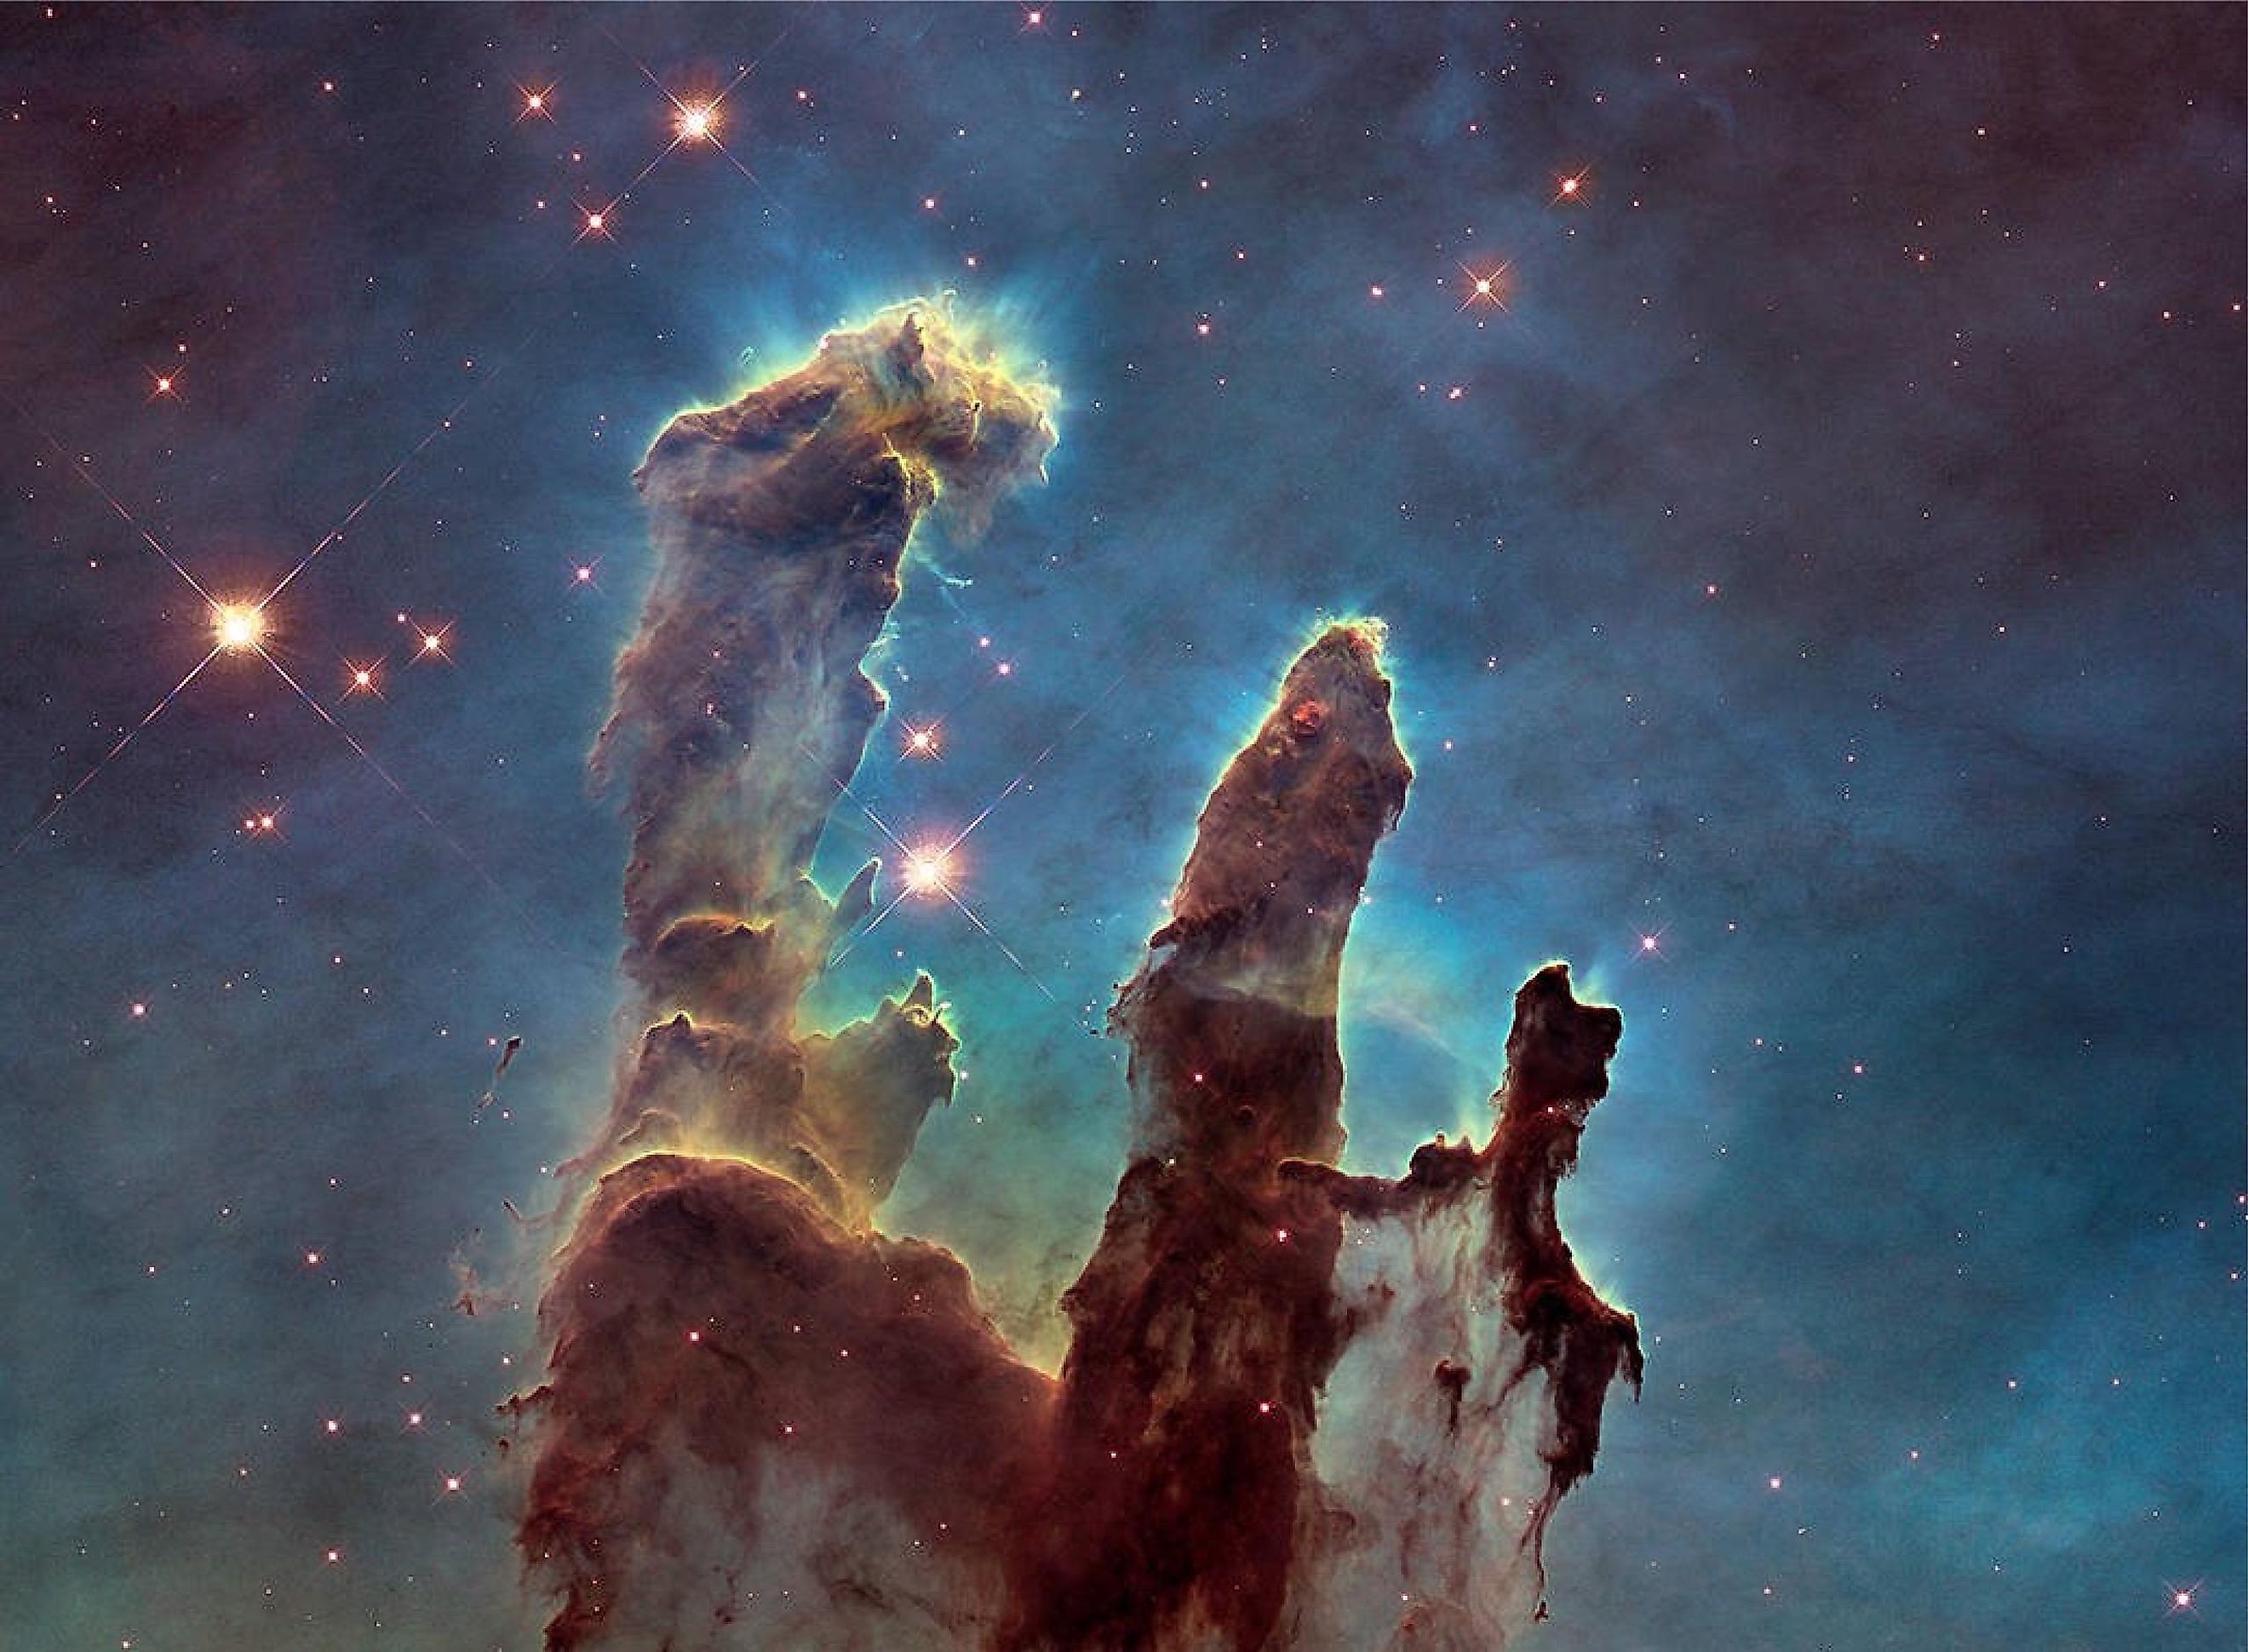 Hubble’s first image of the Pillars of Creation. Image credit: NASA/ESA